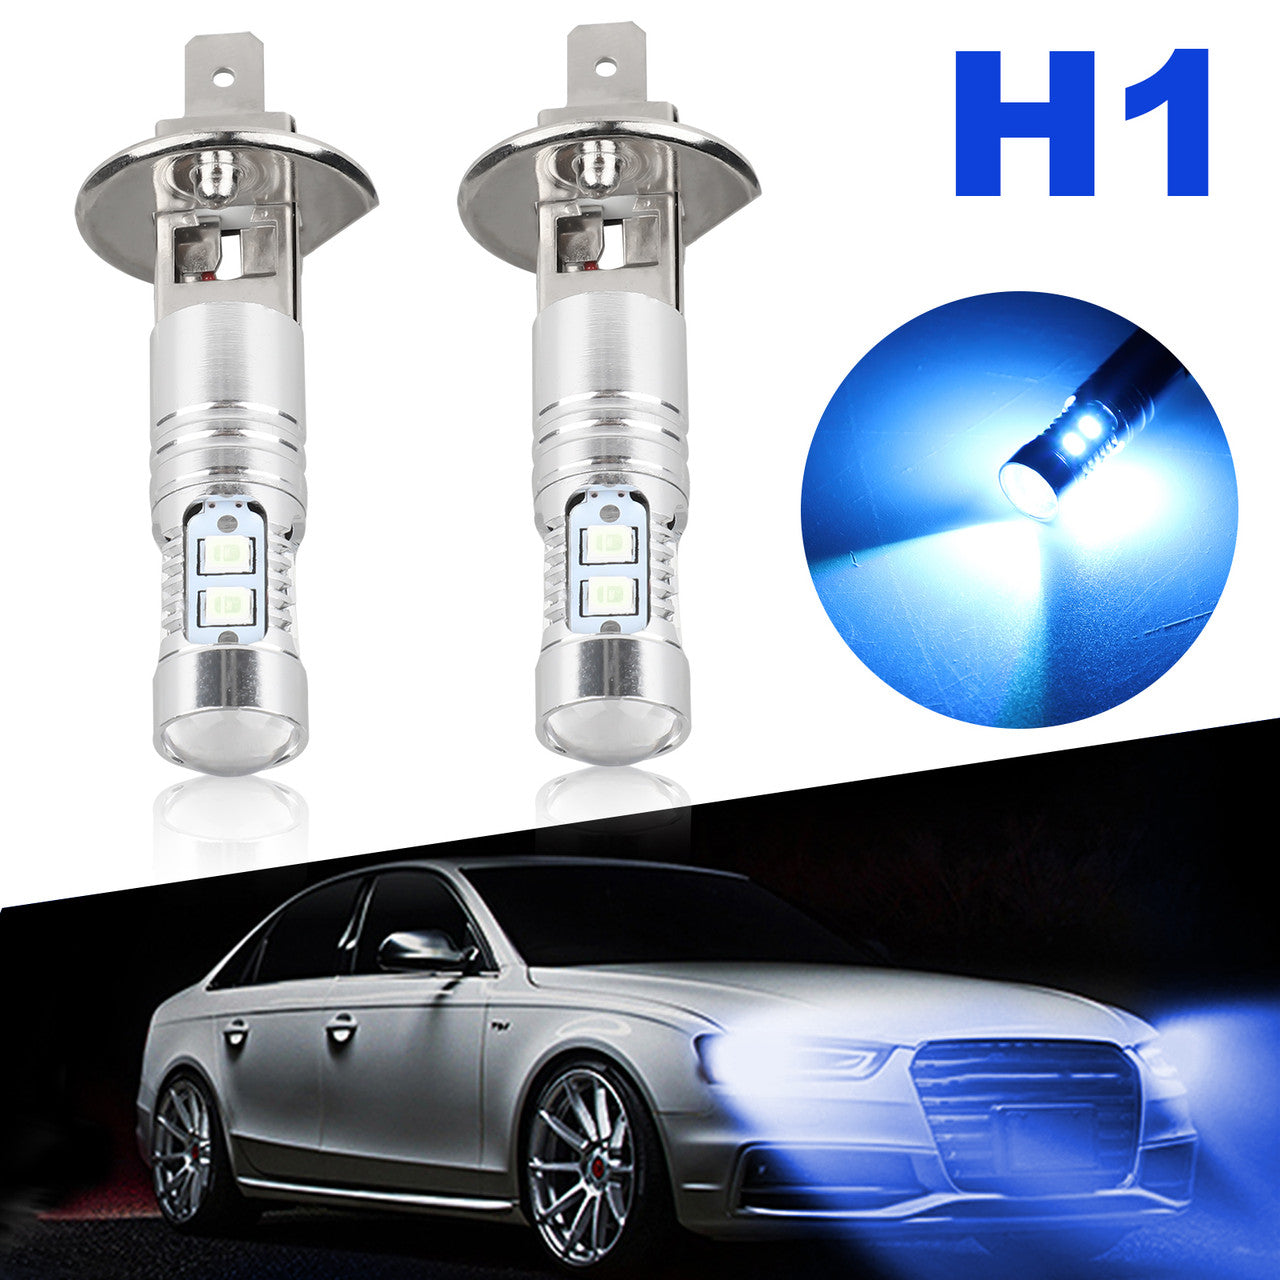 2x H1 Blue LED Headlight Bulb 8000K 1200LM Super Bright H1 Car Light Bulb Replacement for Headlight / Fog Light / Daytime Running Light, Plug & Play